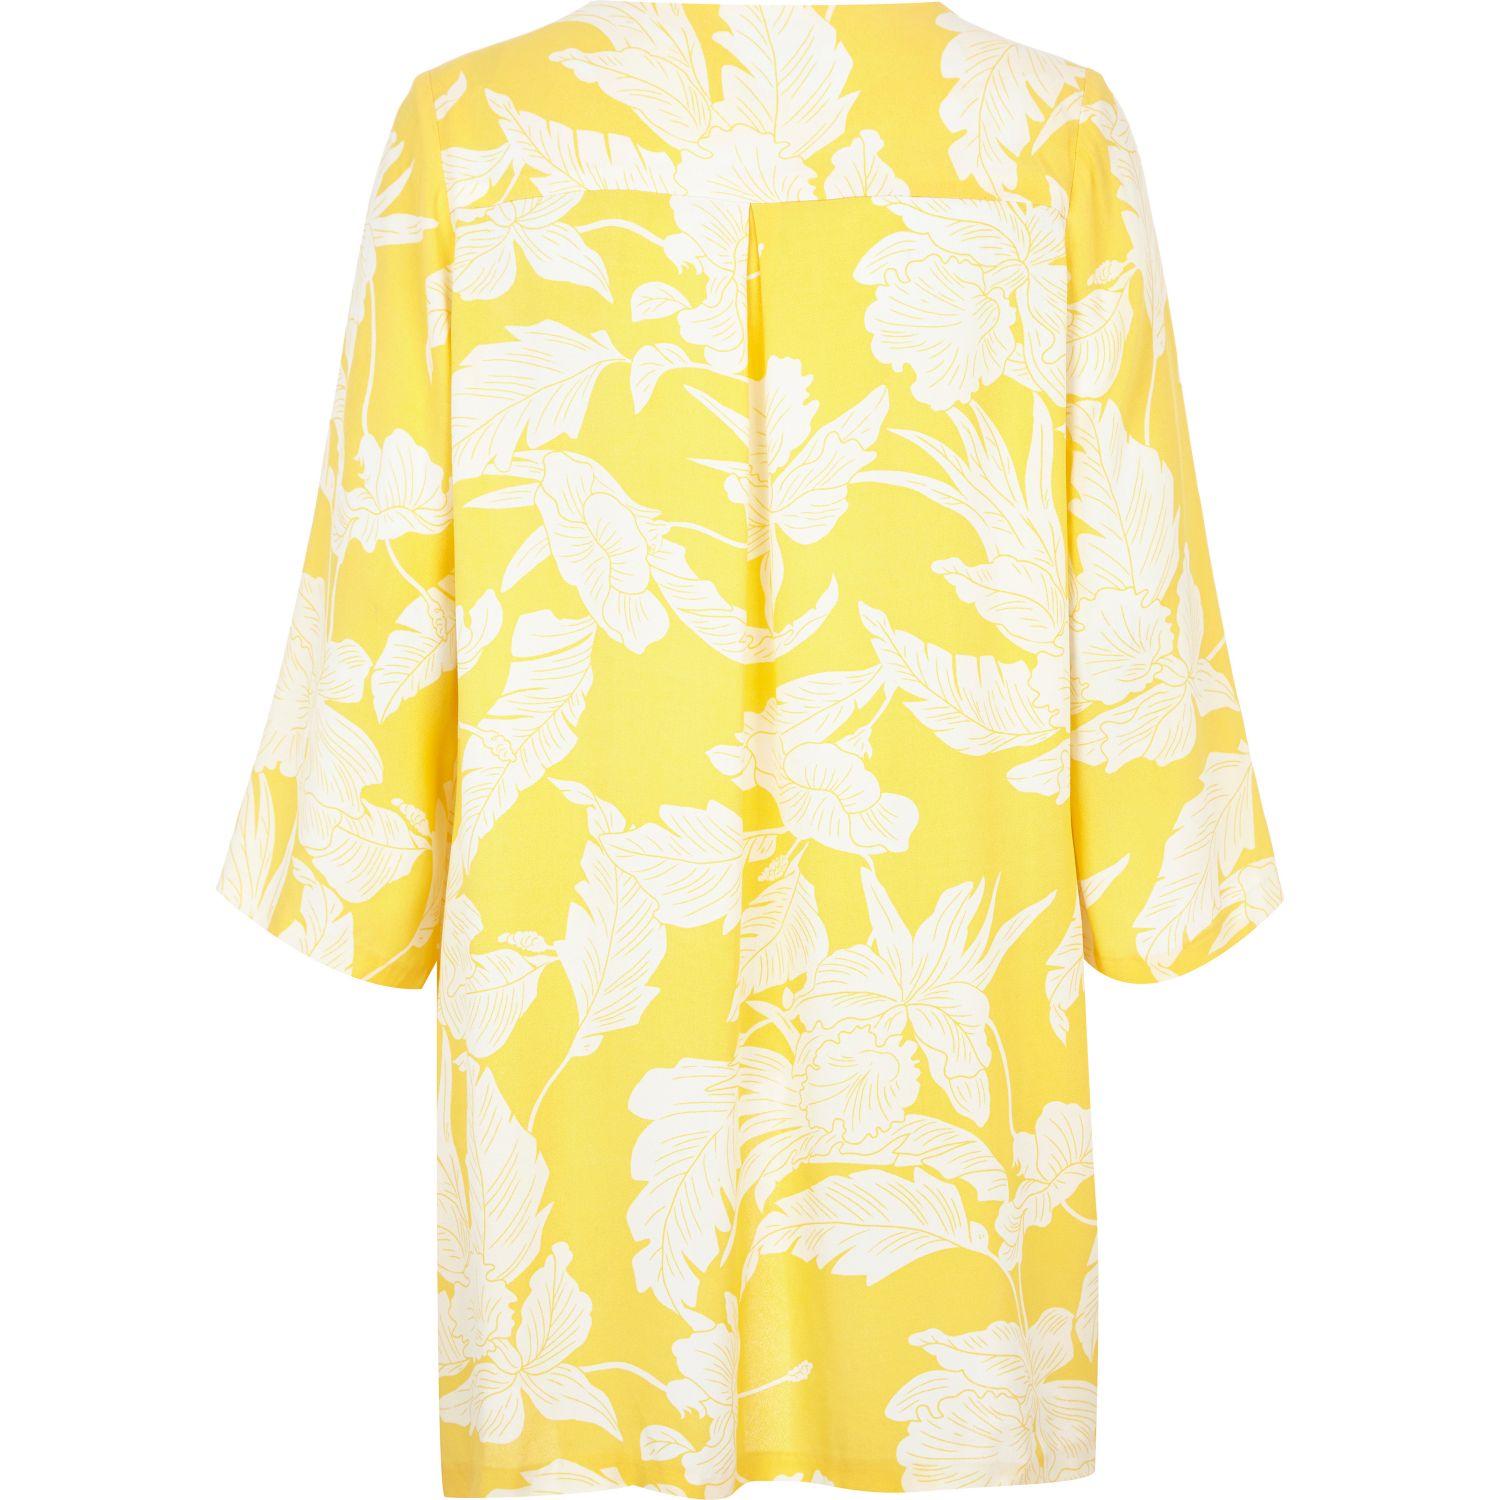 Lyst - River island Yellow Floral Print Kimono in Yellow